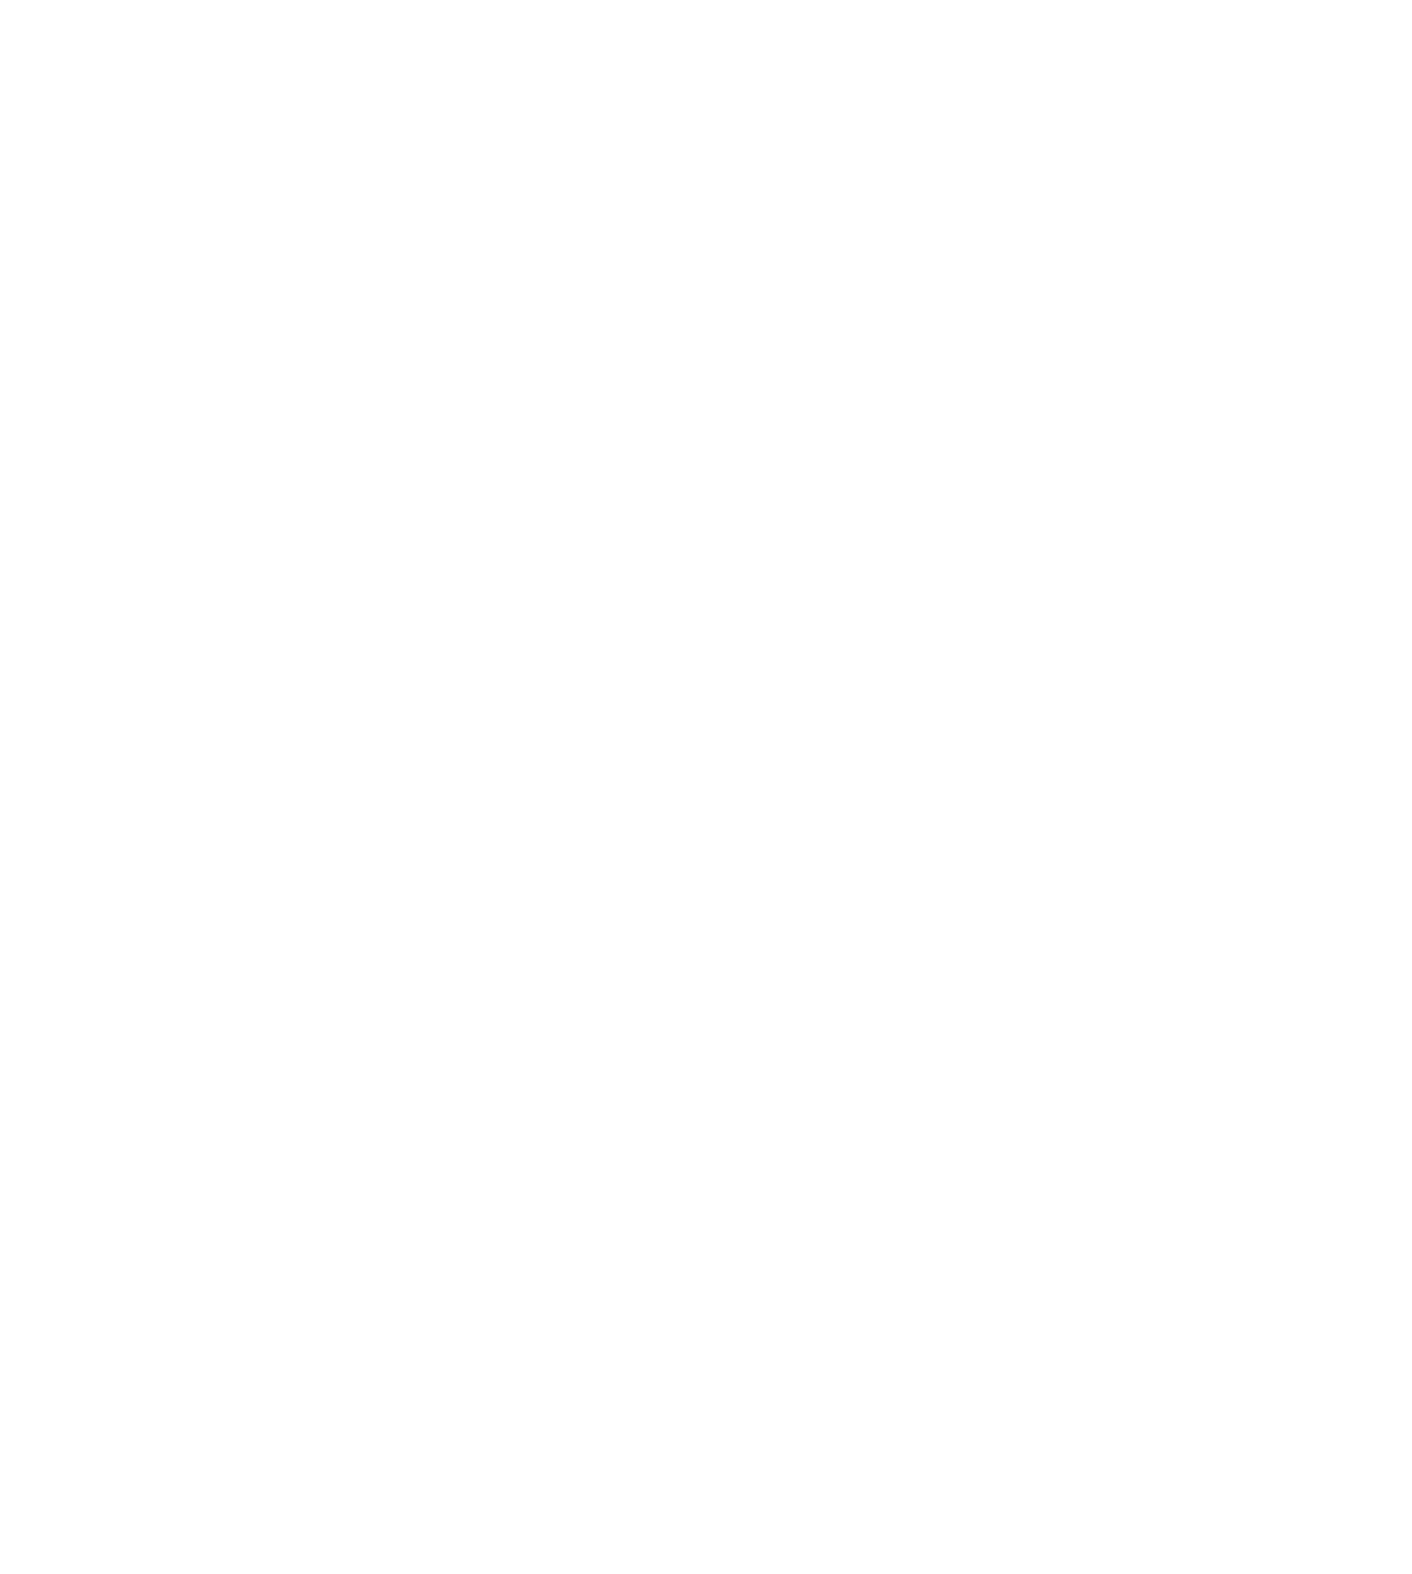 STAG Industrial logo pour fonds sombres (PNG transparent)